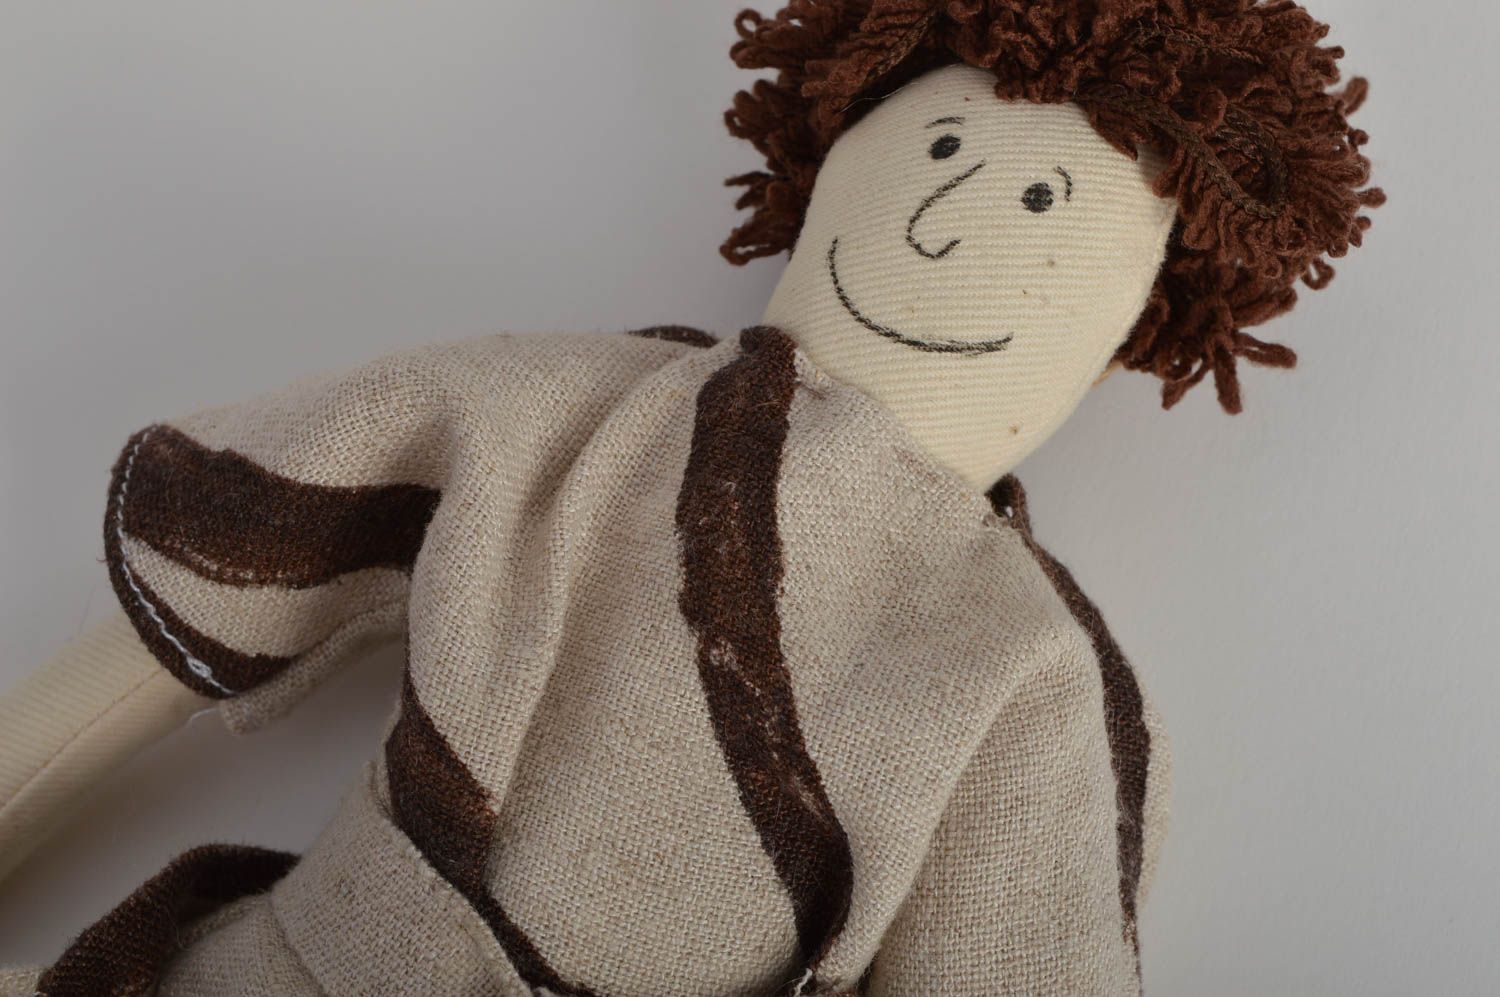 Handmade designer fabric soft doll for kids and interior decor boy with bag photo 4